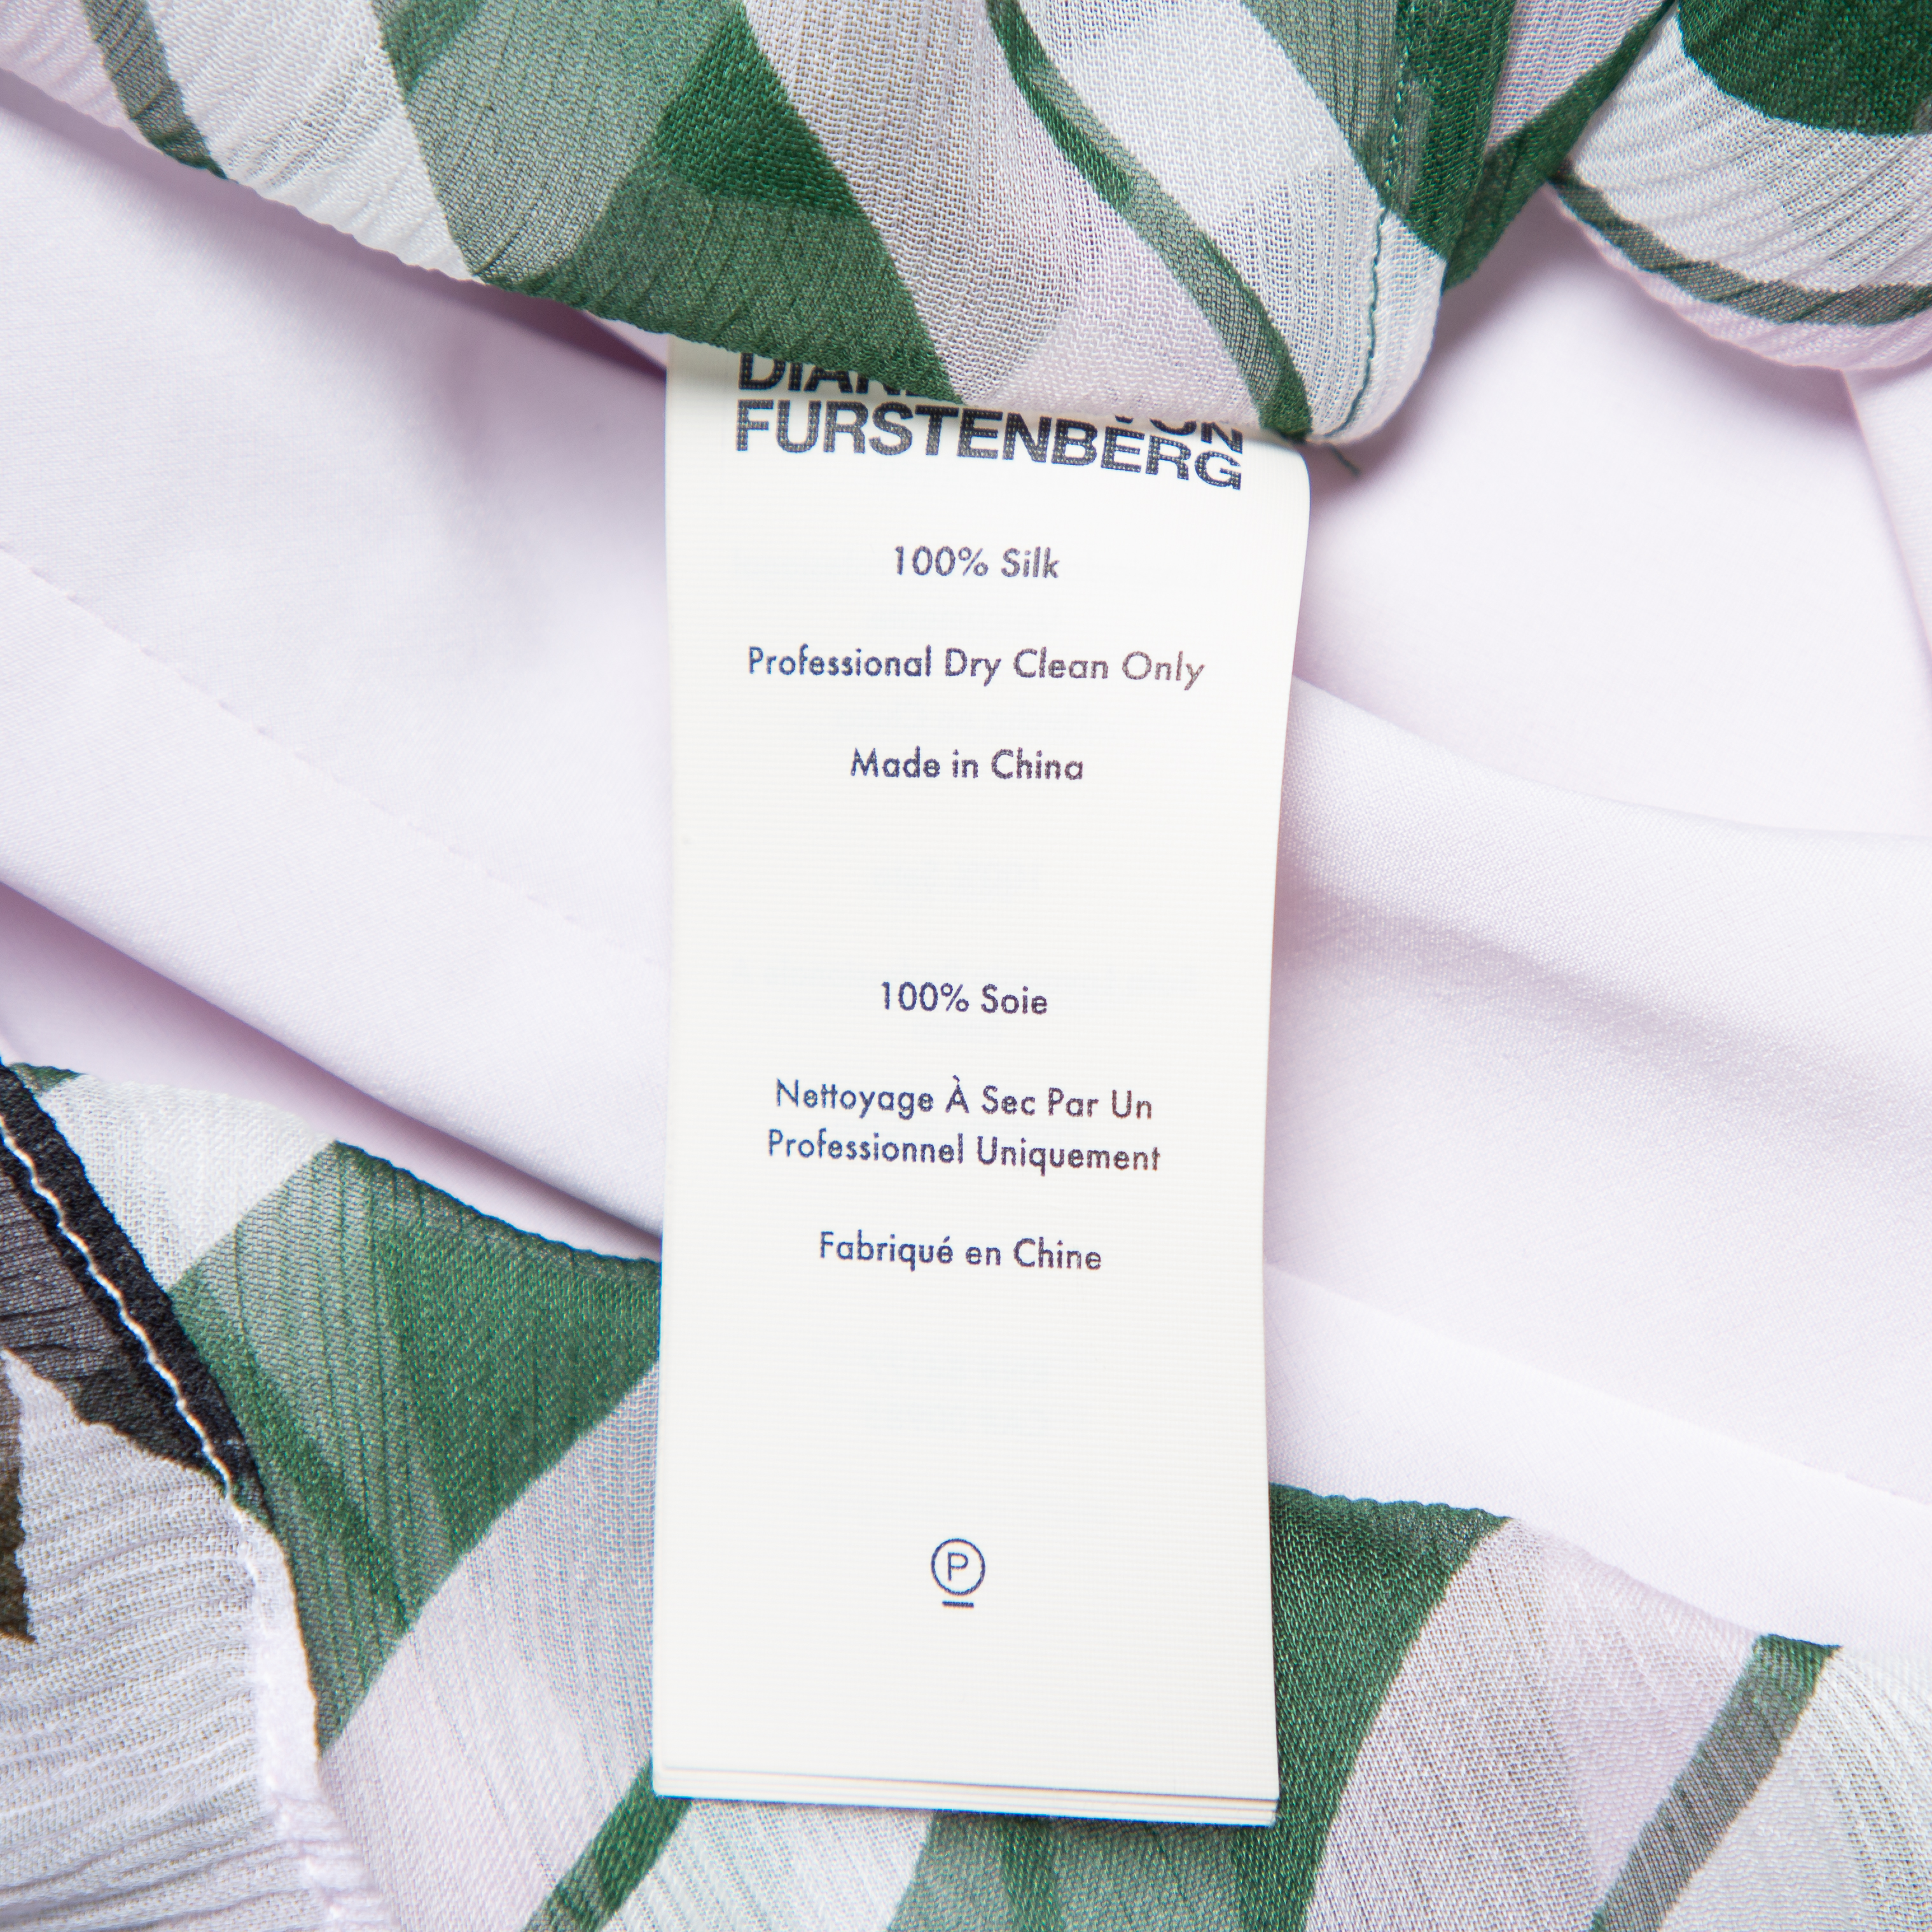 Diane Von Furstenberg Multicolor Silk Ruffled Oversized Mini Dress XS